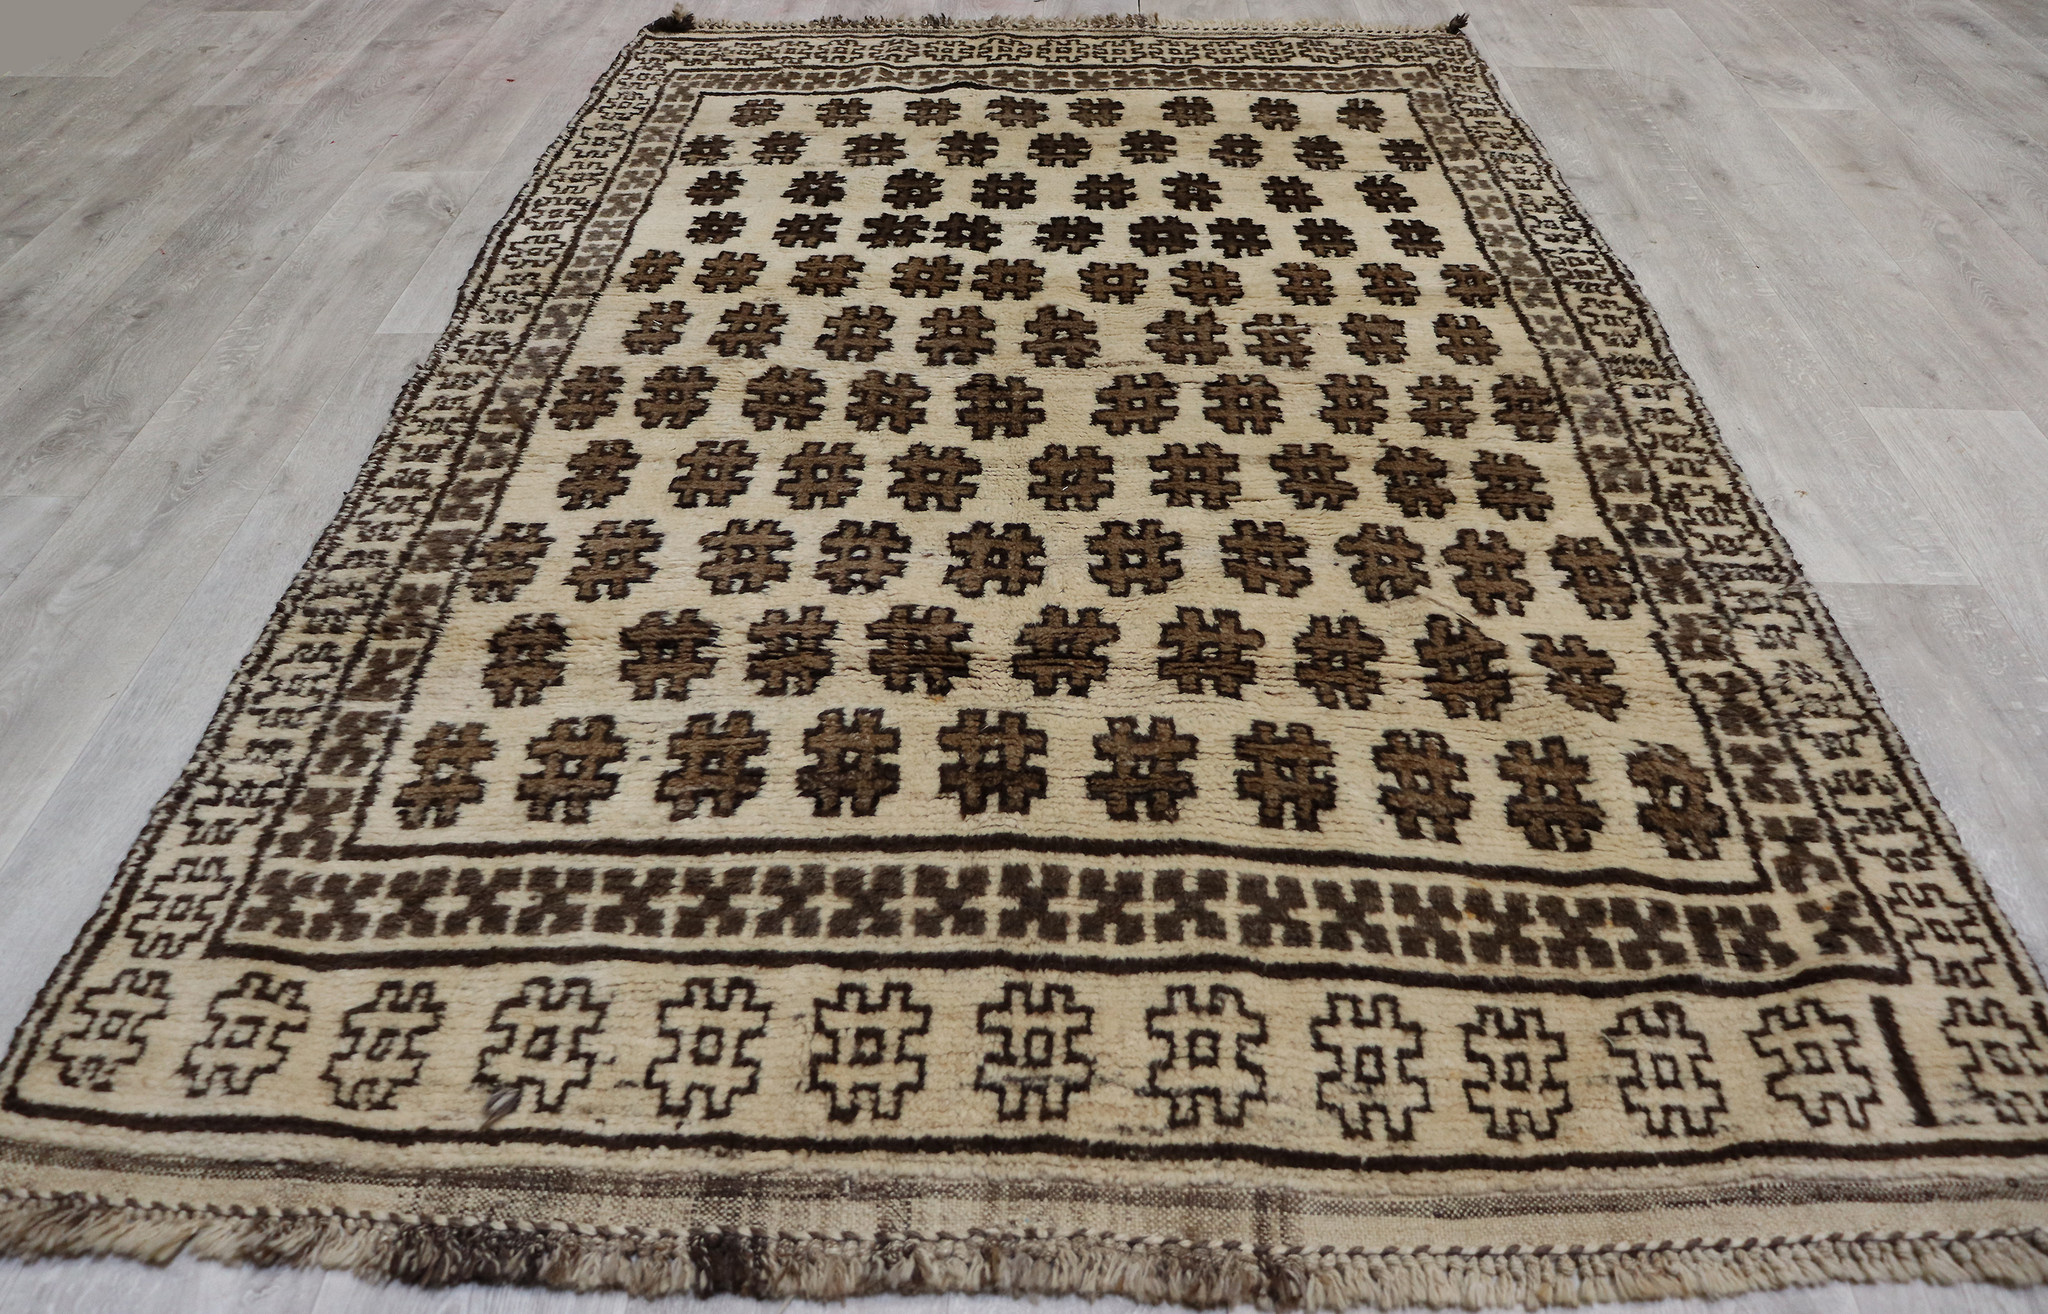 240x150 cm Antique tribal Nomadic Beloch Vintage hand-knotted carpet rug undyed natural handspun sheep wool froom Afghanistan nawid22/1